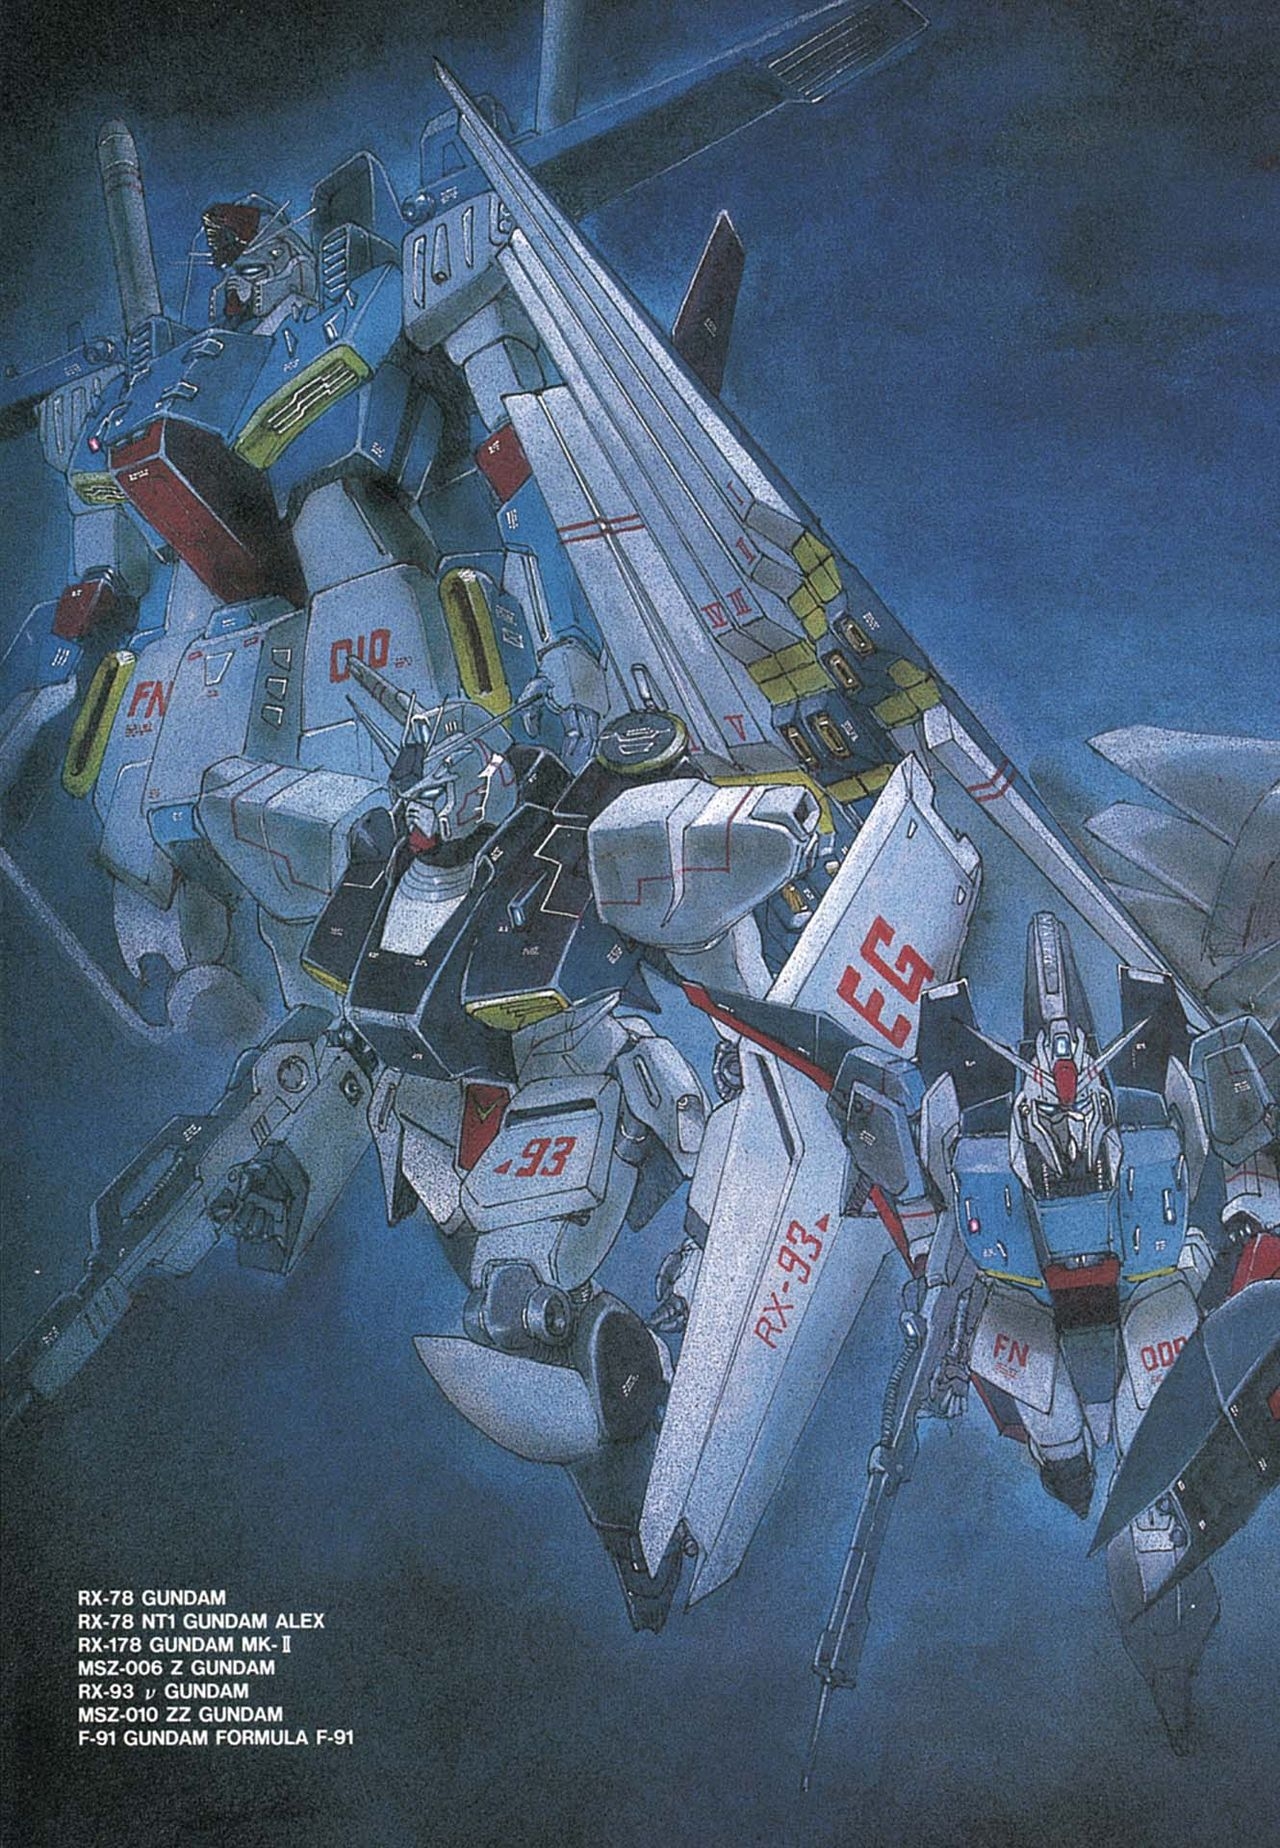 [Kazuhisa Kondo] Kazuhisa Kondo 2D & 3D Works - Go Ahead - From Mobile Suit Gundam to Original Mechanism 62